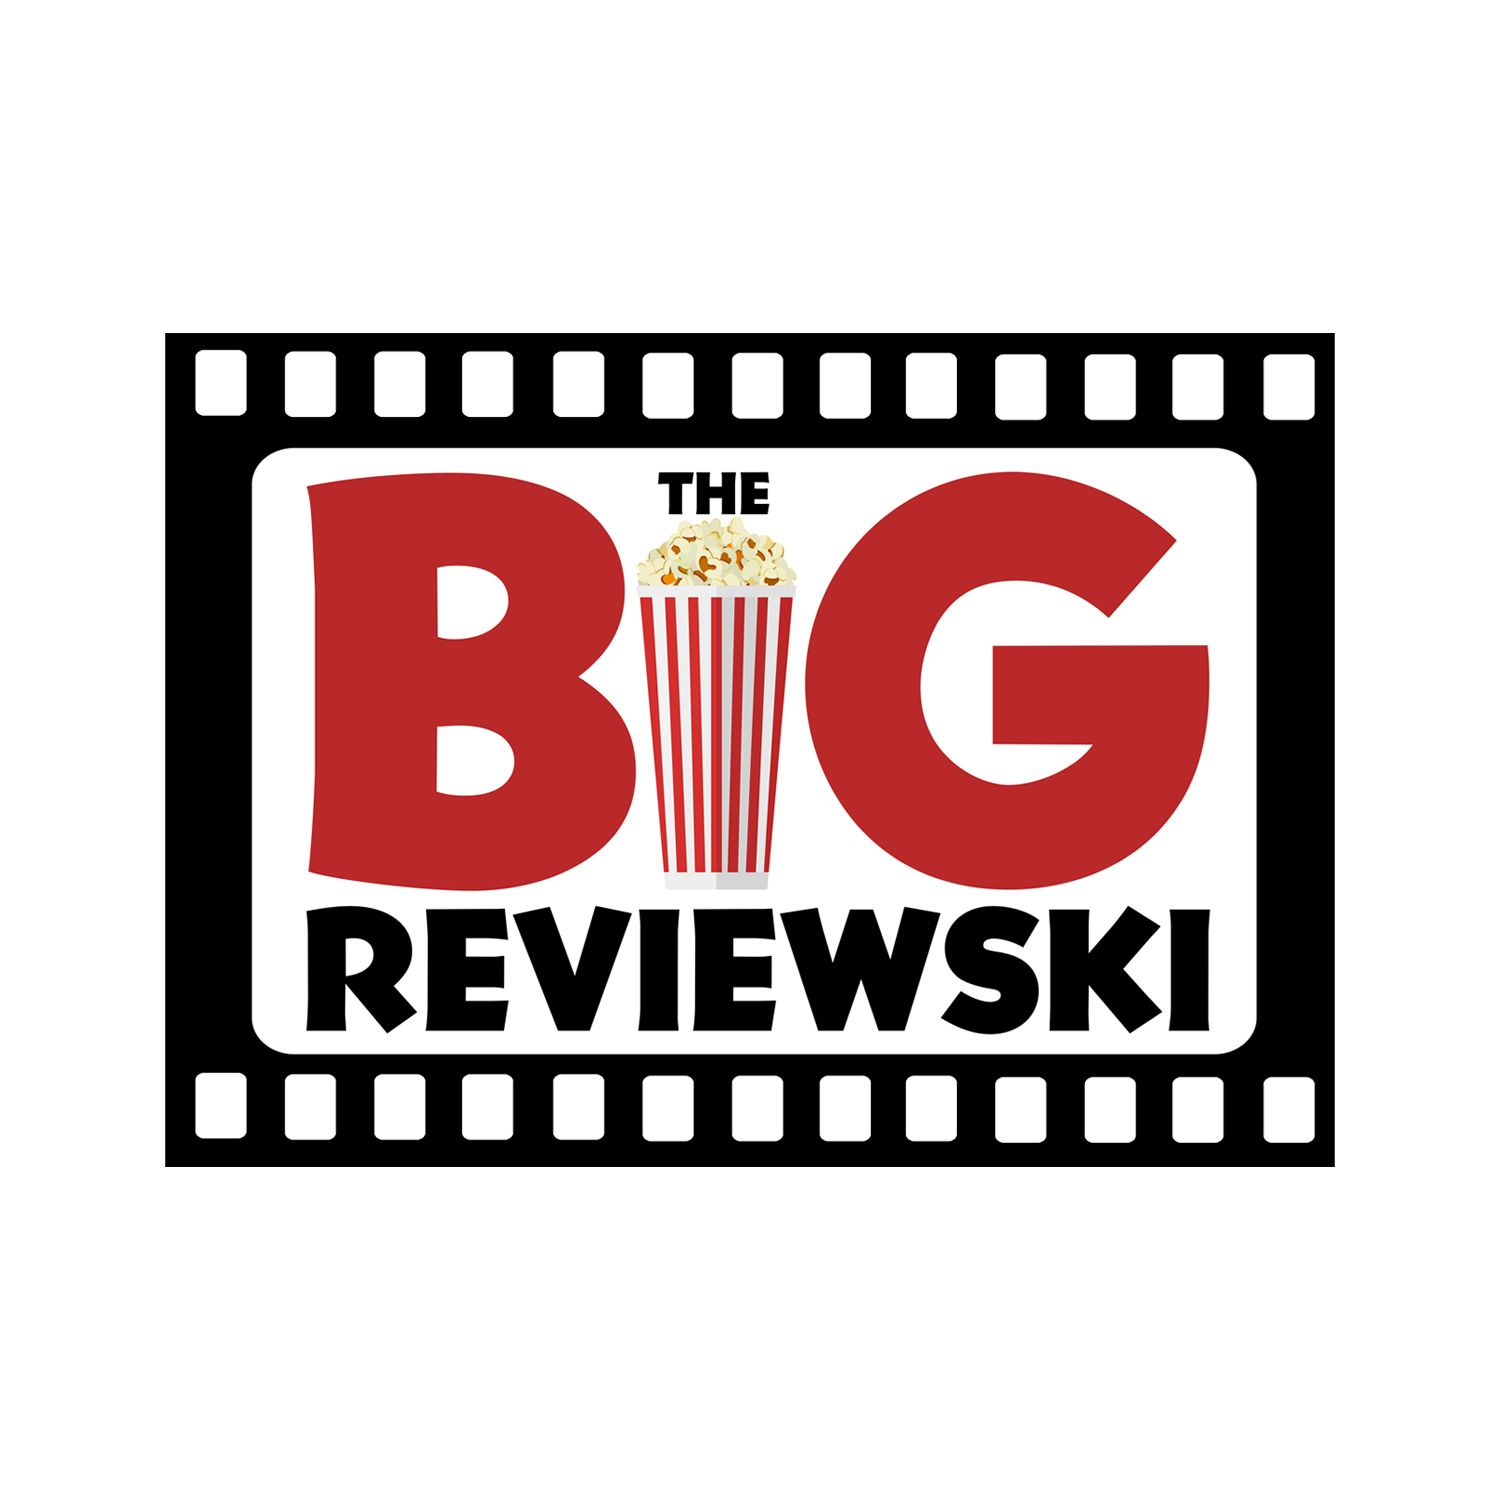 The Big Reviewski